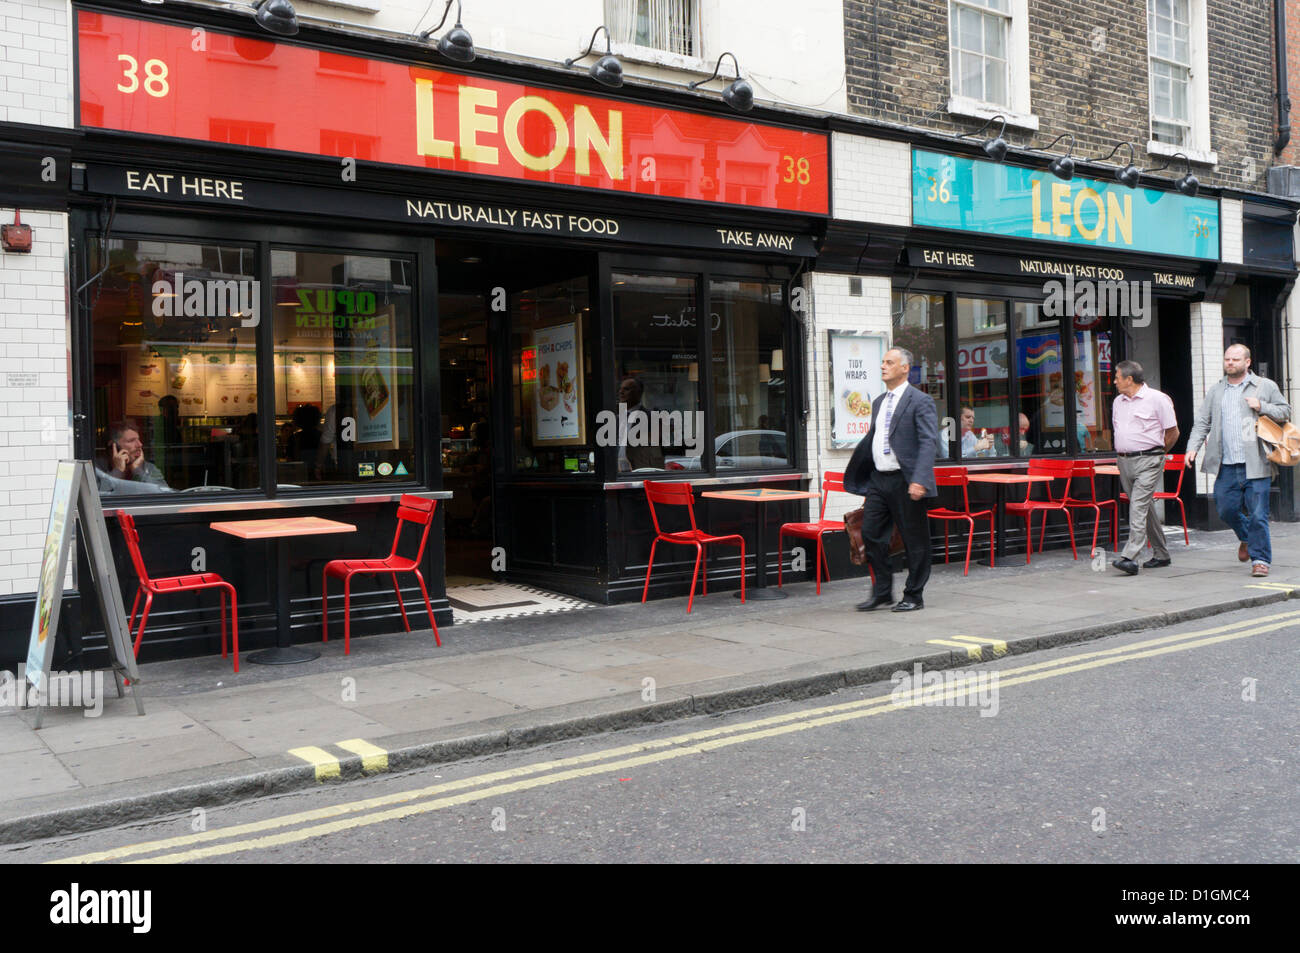 LEON fast food restaurant in Soho, London. Stock Photo